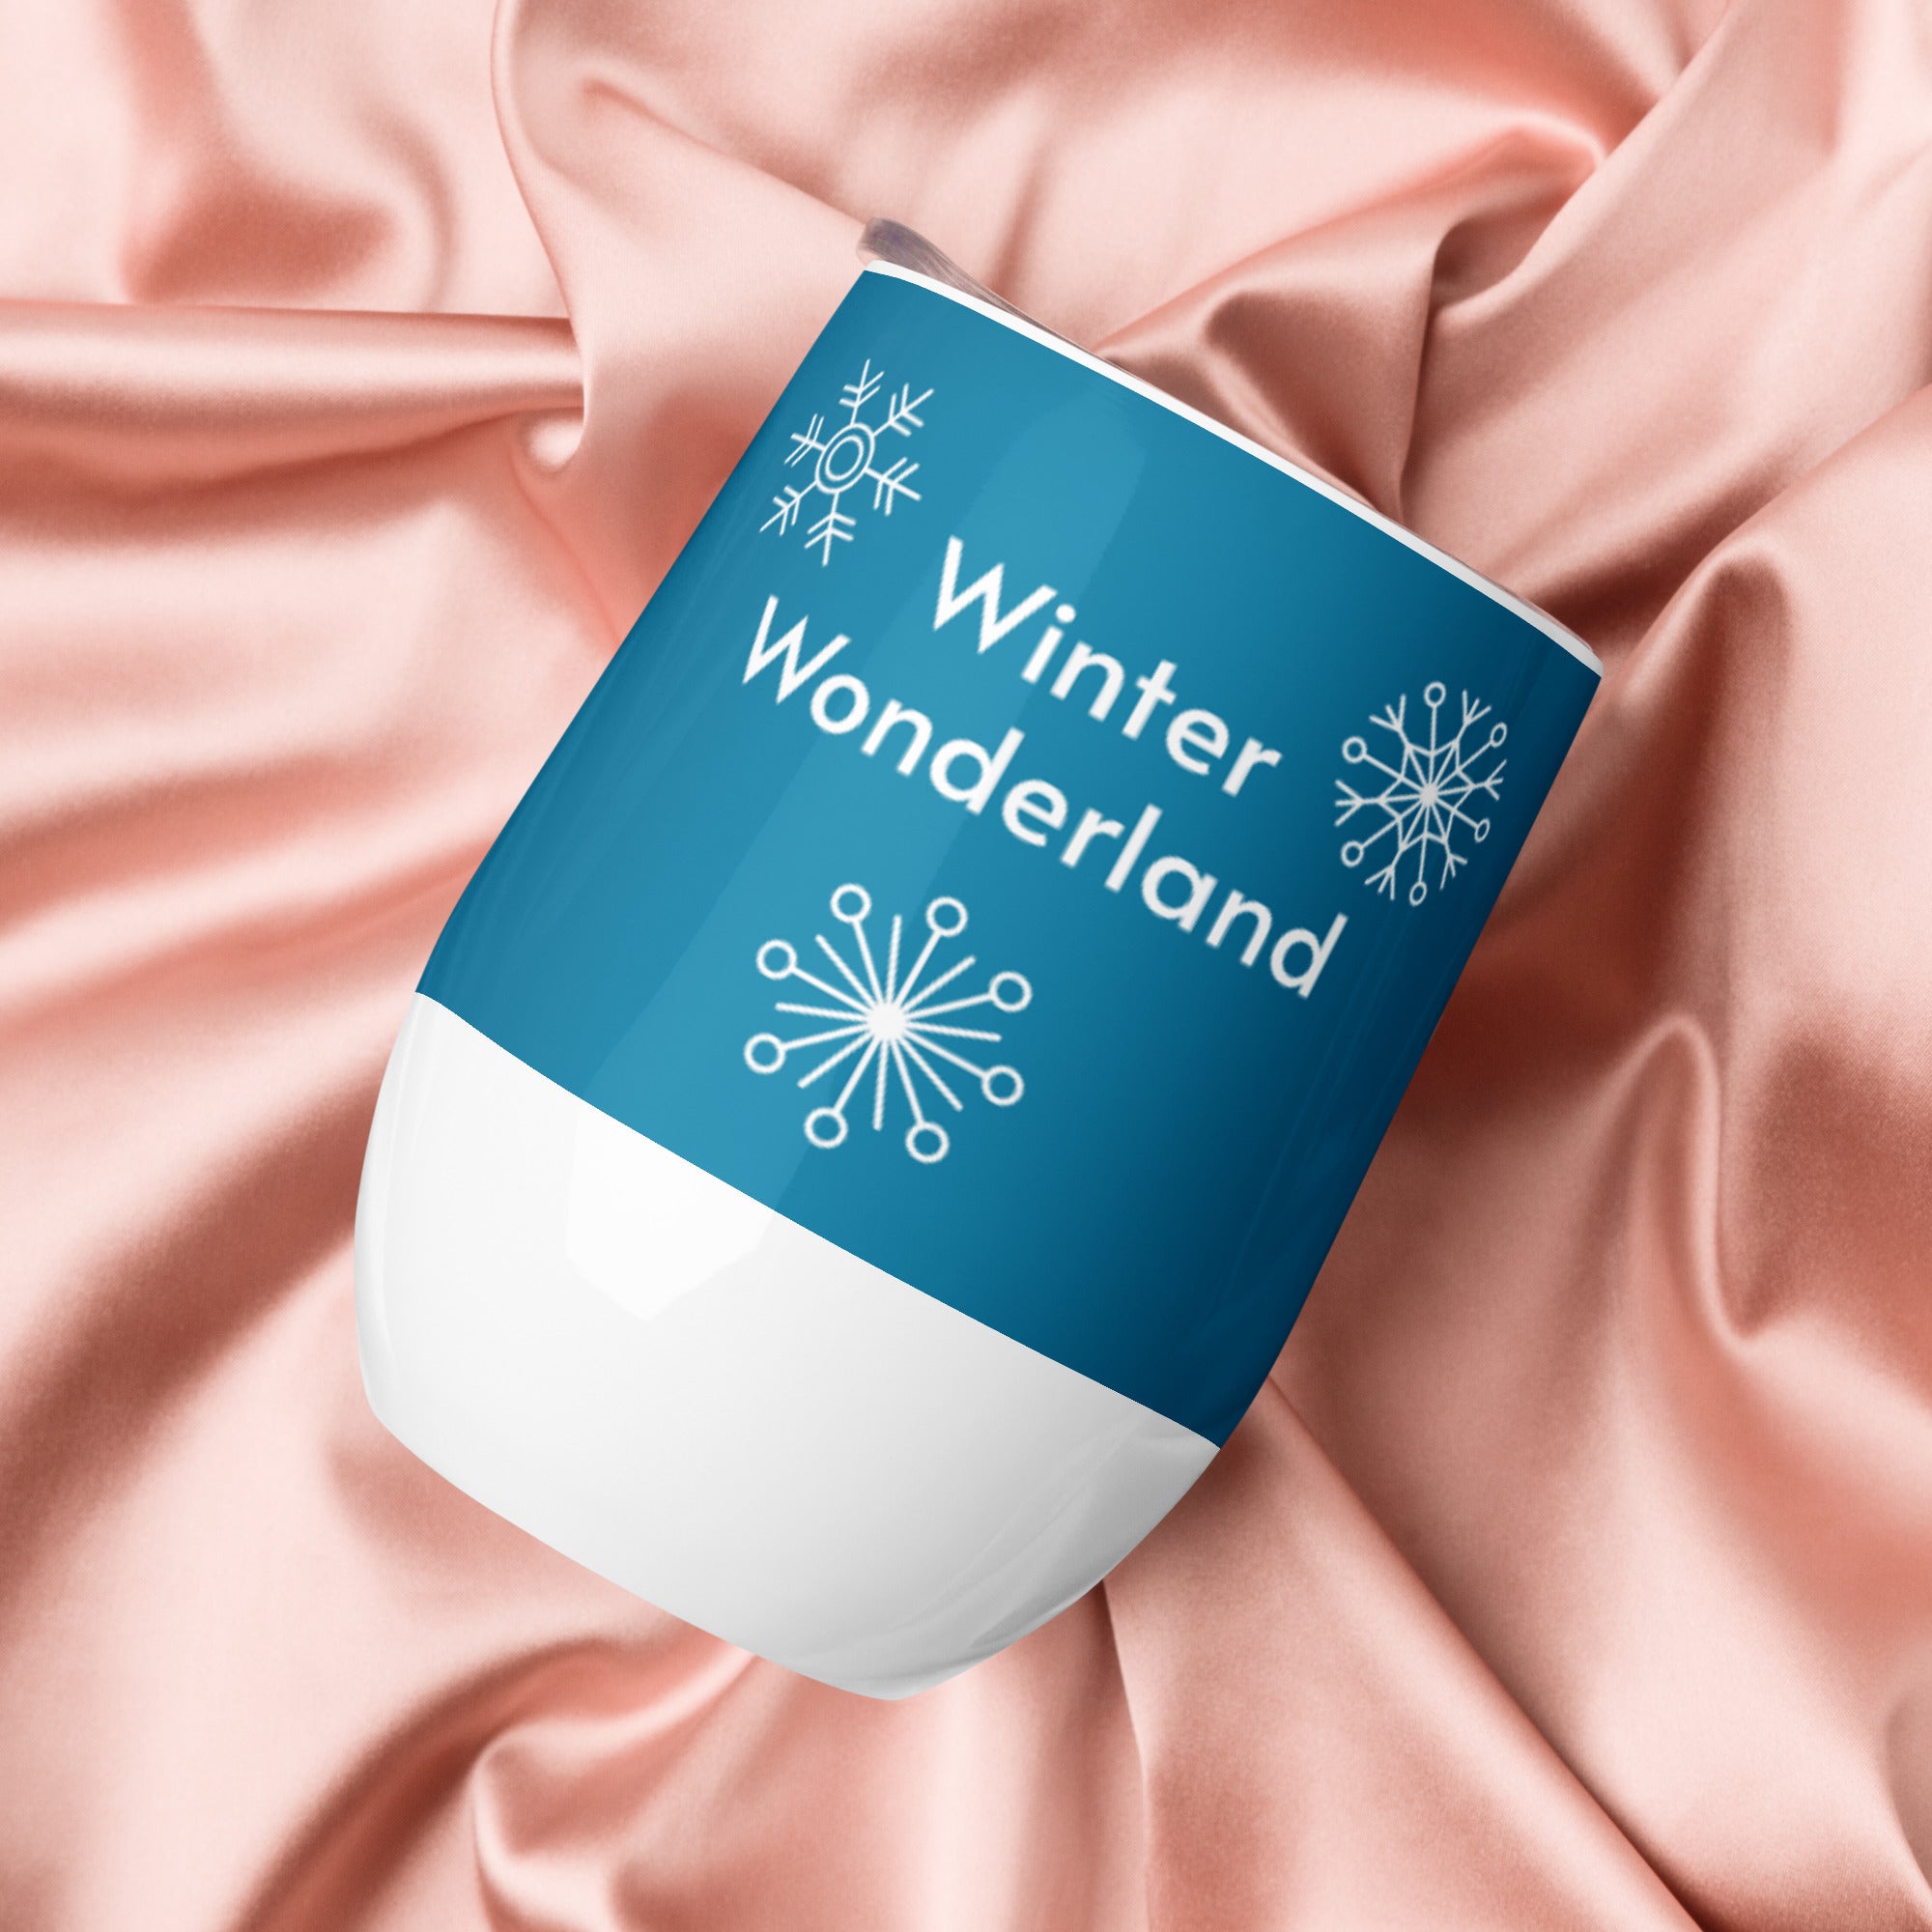 Winter Wonderland Wine tumbler